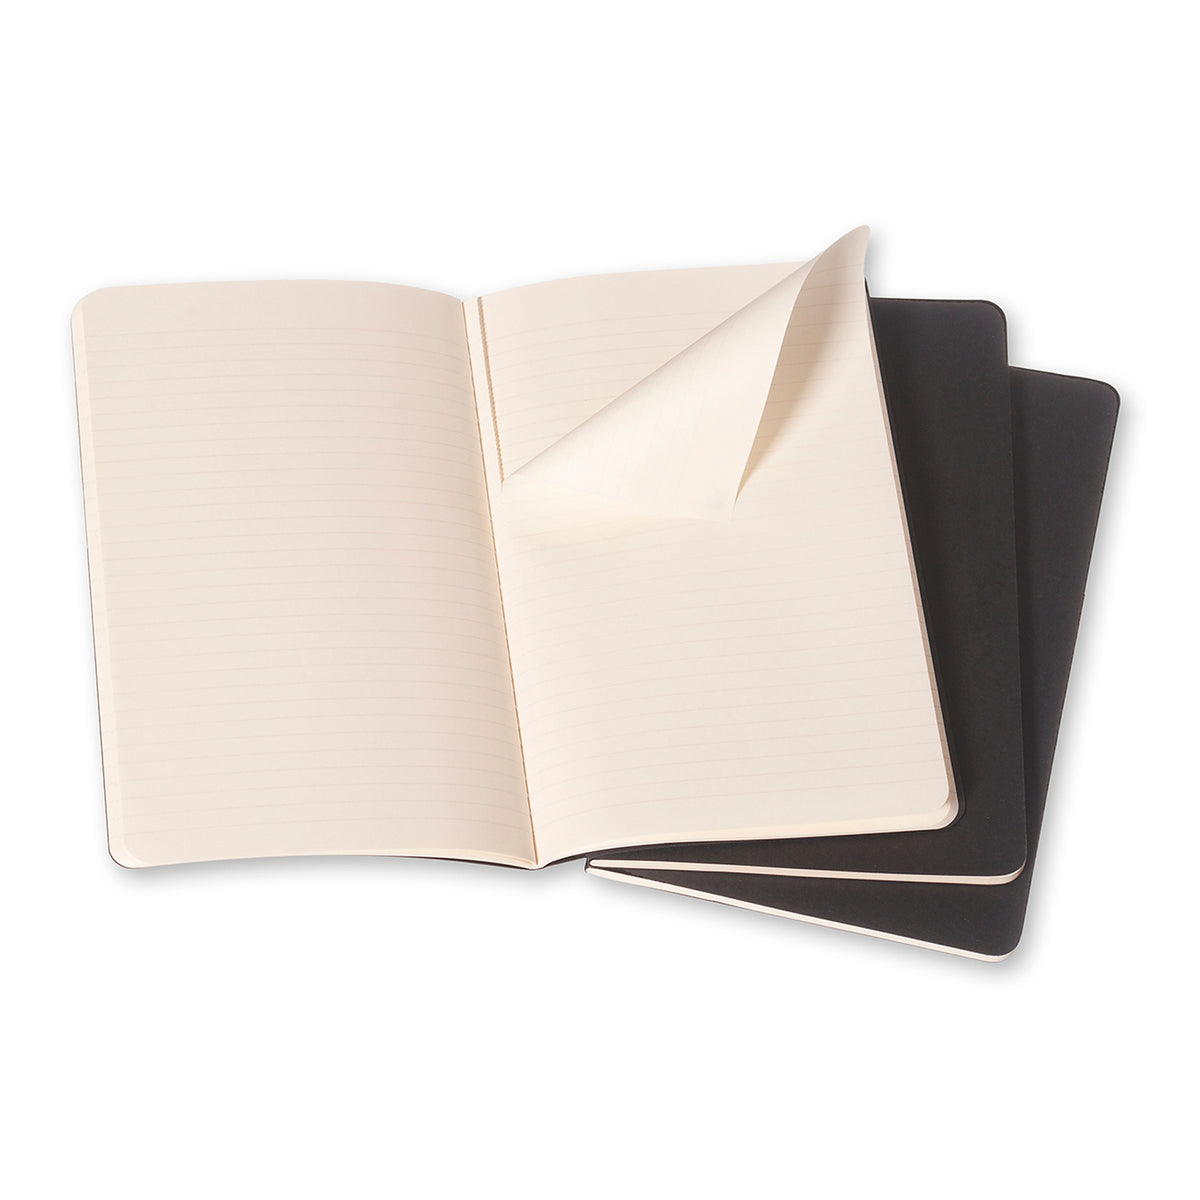 Moleskine - Cahier Notebook - Set of 3 - Ruled - Large - Black